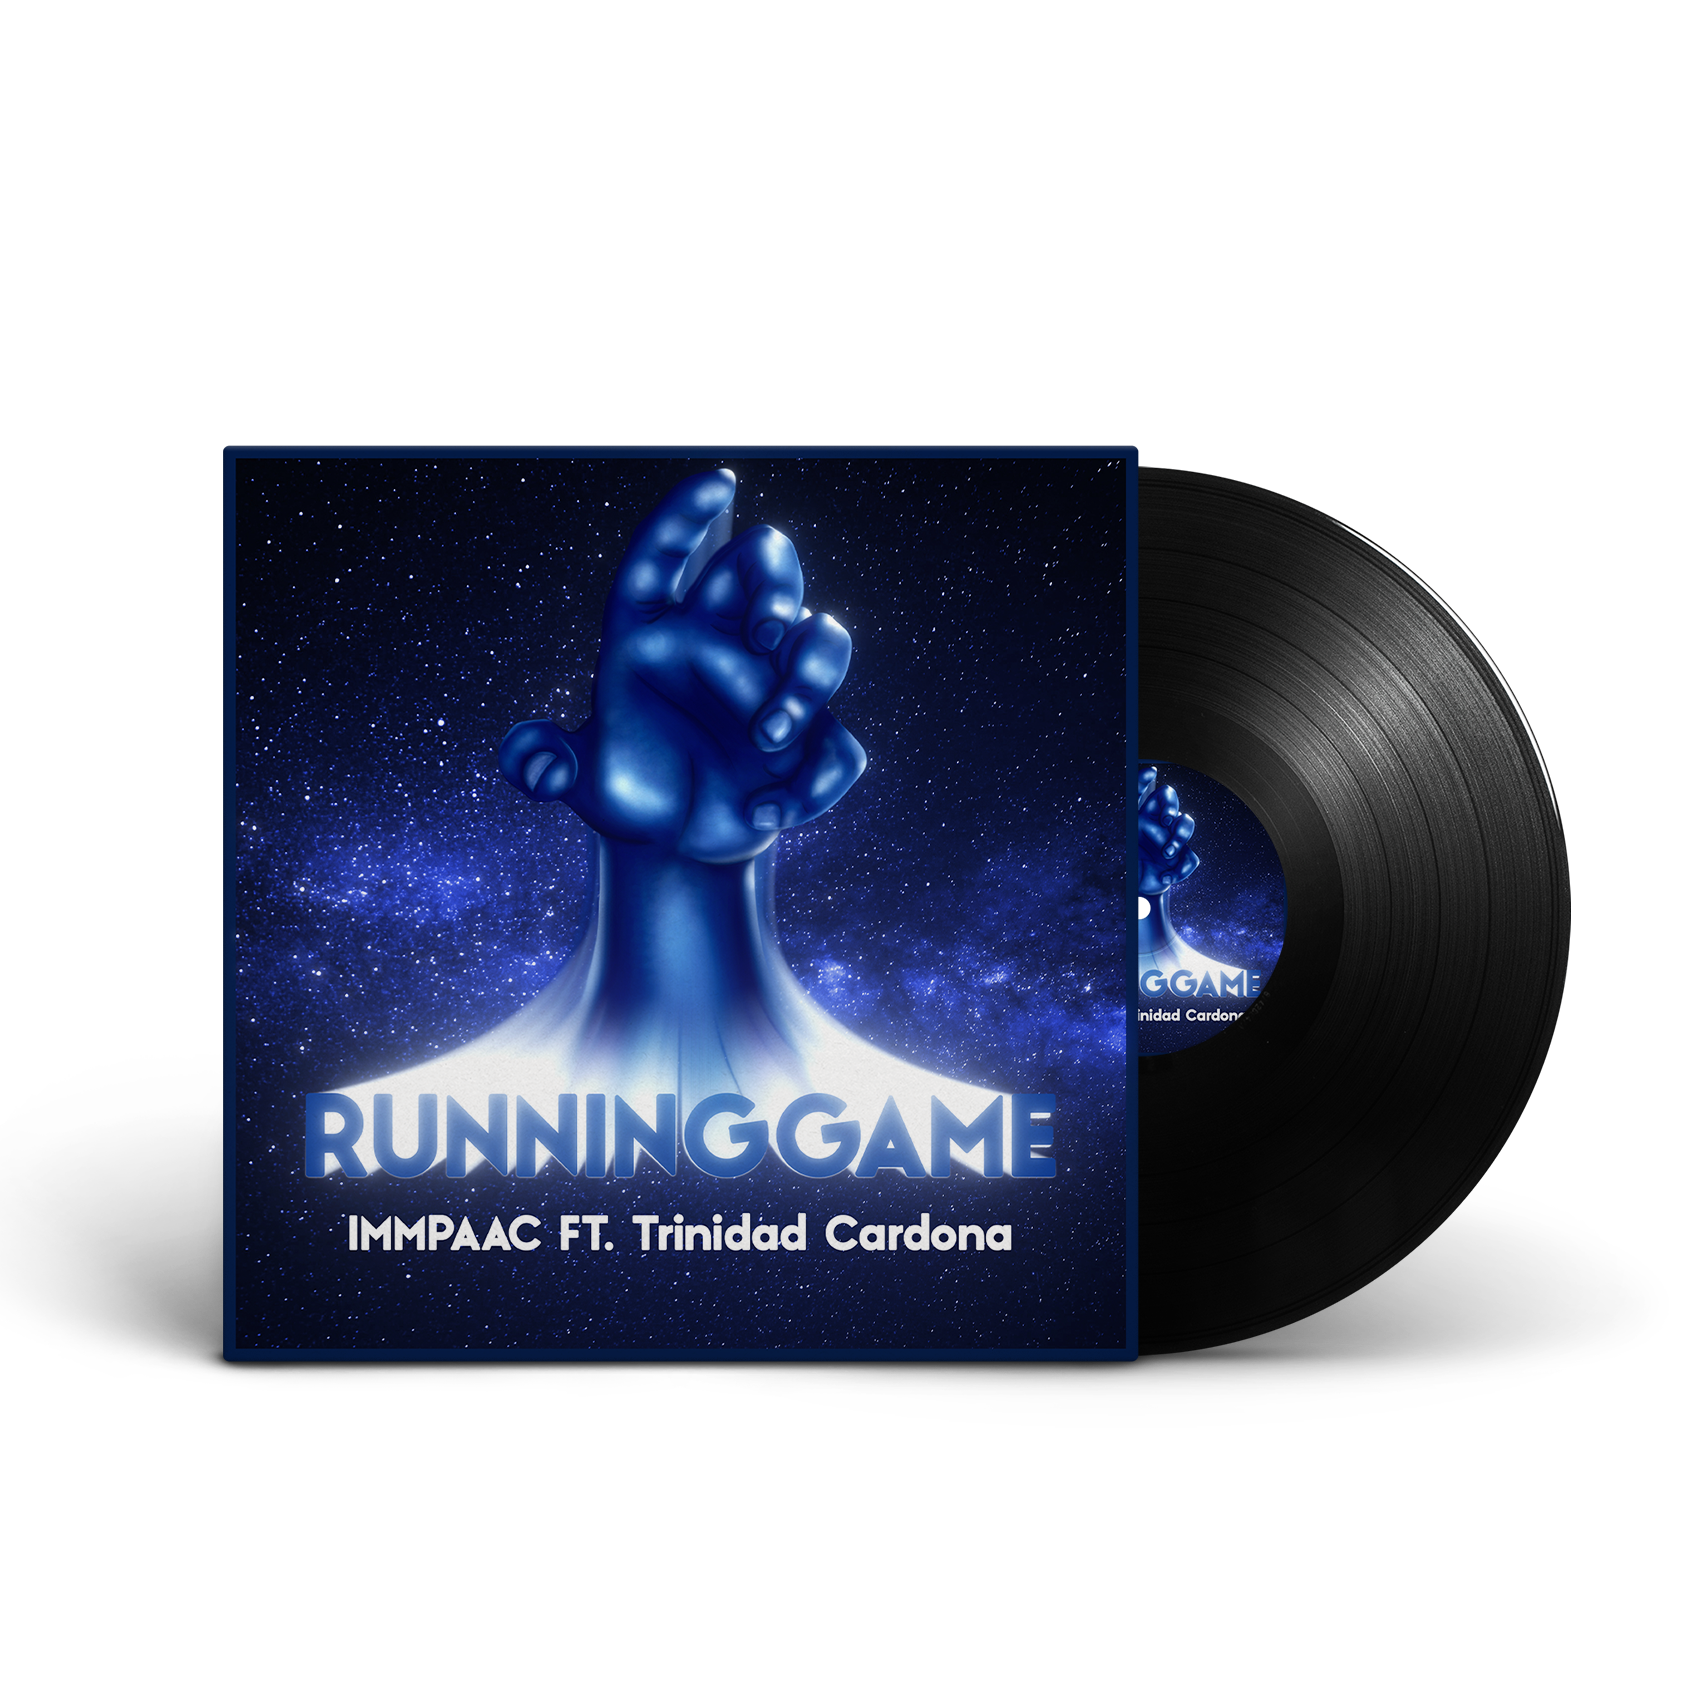 "Running Game" by IMMPAAC FT. Trinidad Cardona Video Coming Soon!